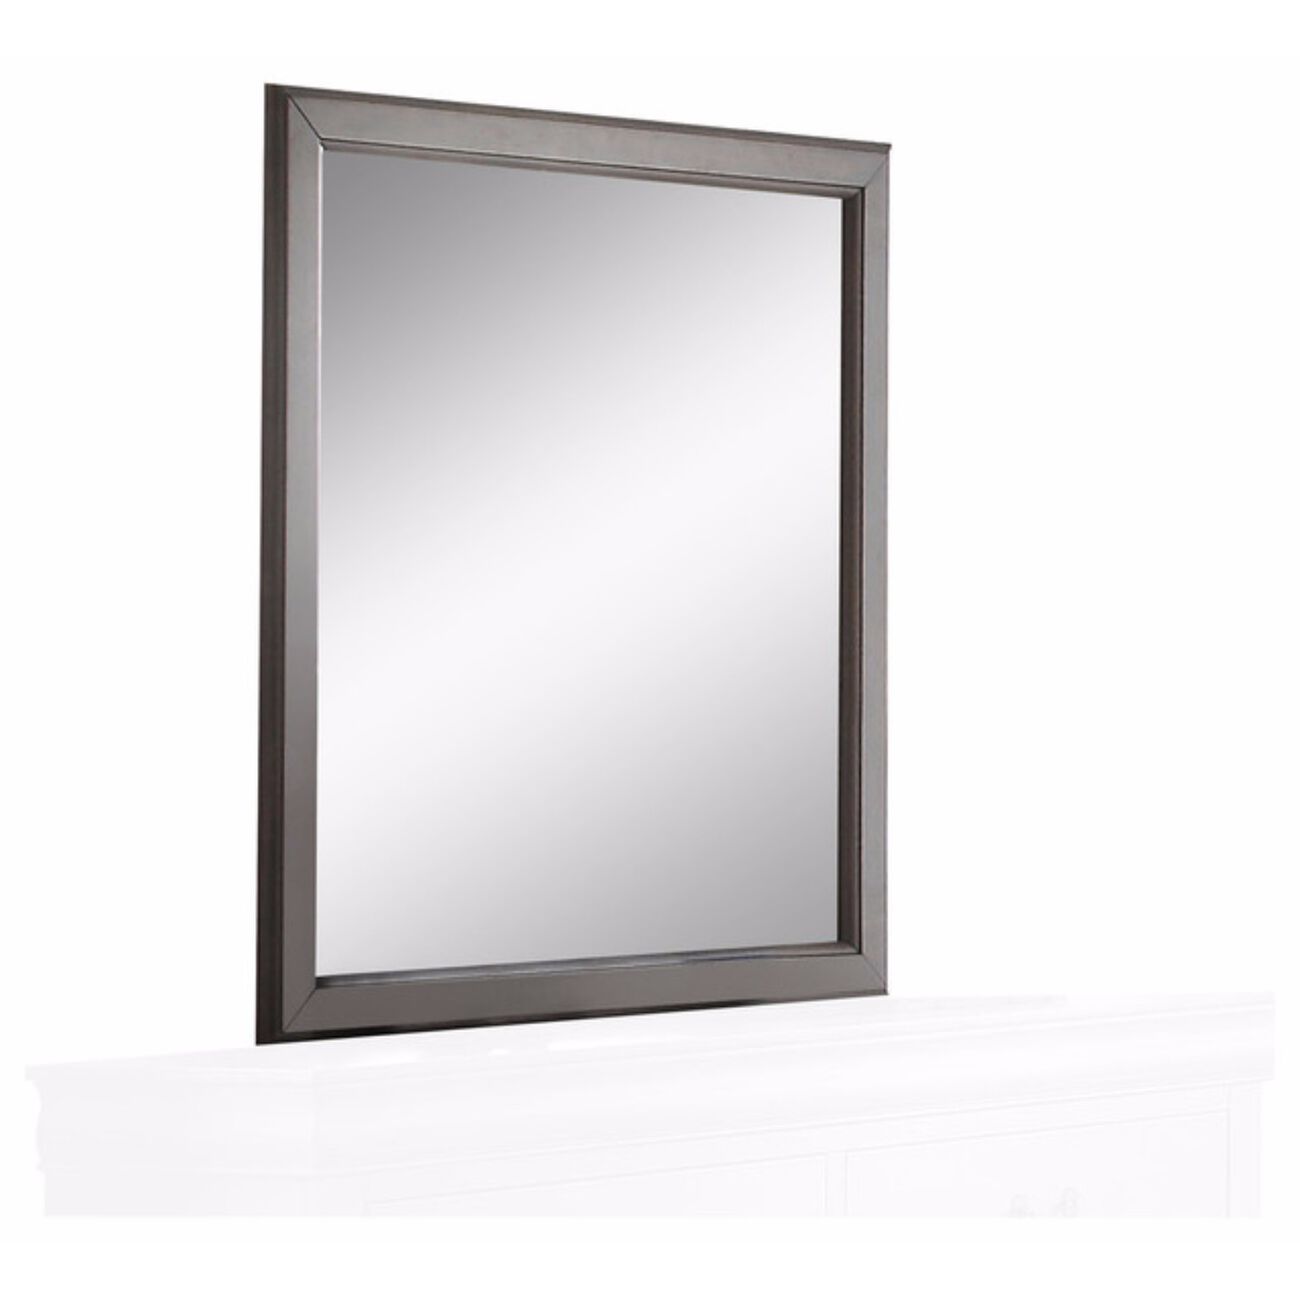 Sassy Wooden Square Mirror, Gray_x000D_
_x000D_
_x000D_
_x000D_
_x000D_